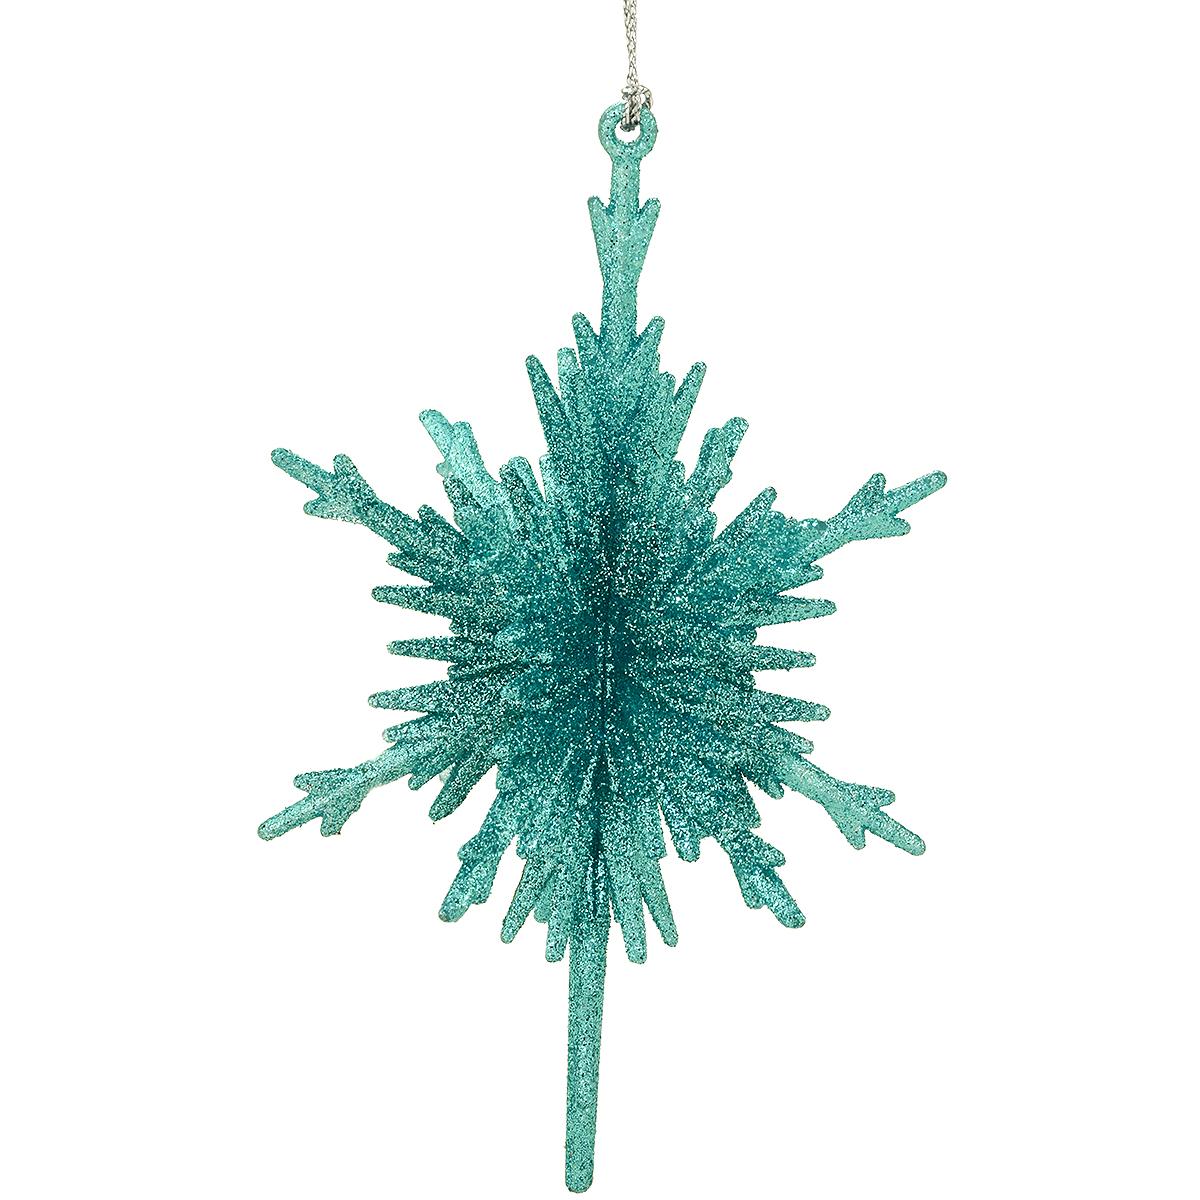 Teal 3D Snowflake Glitter Ornament